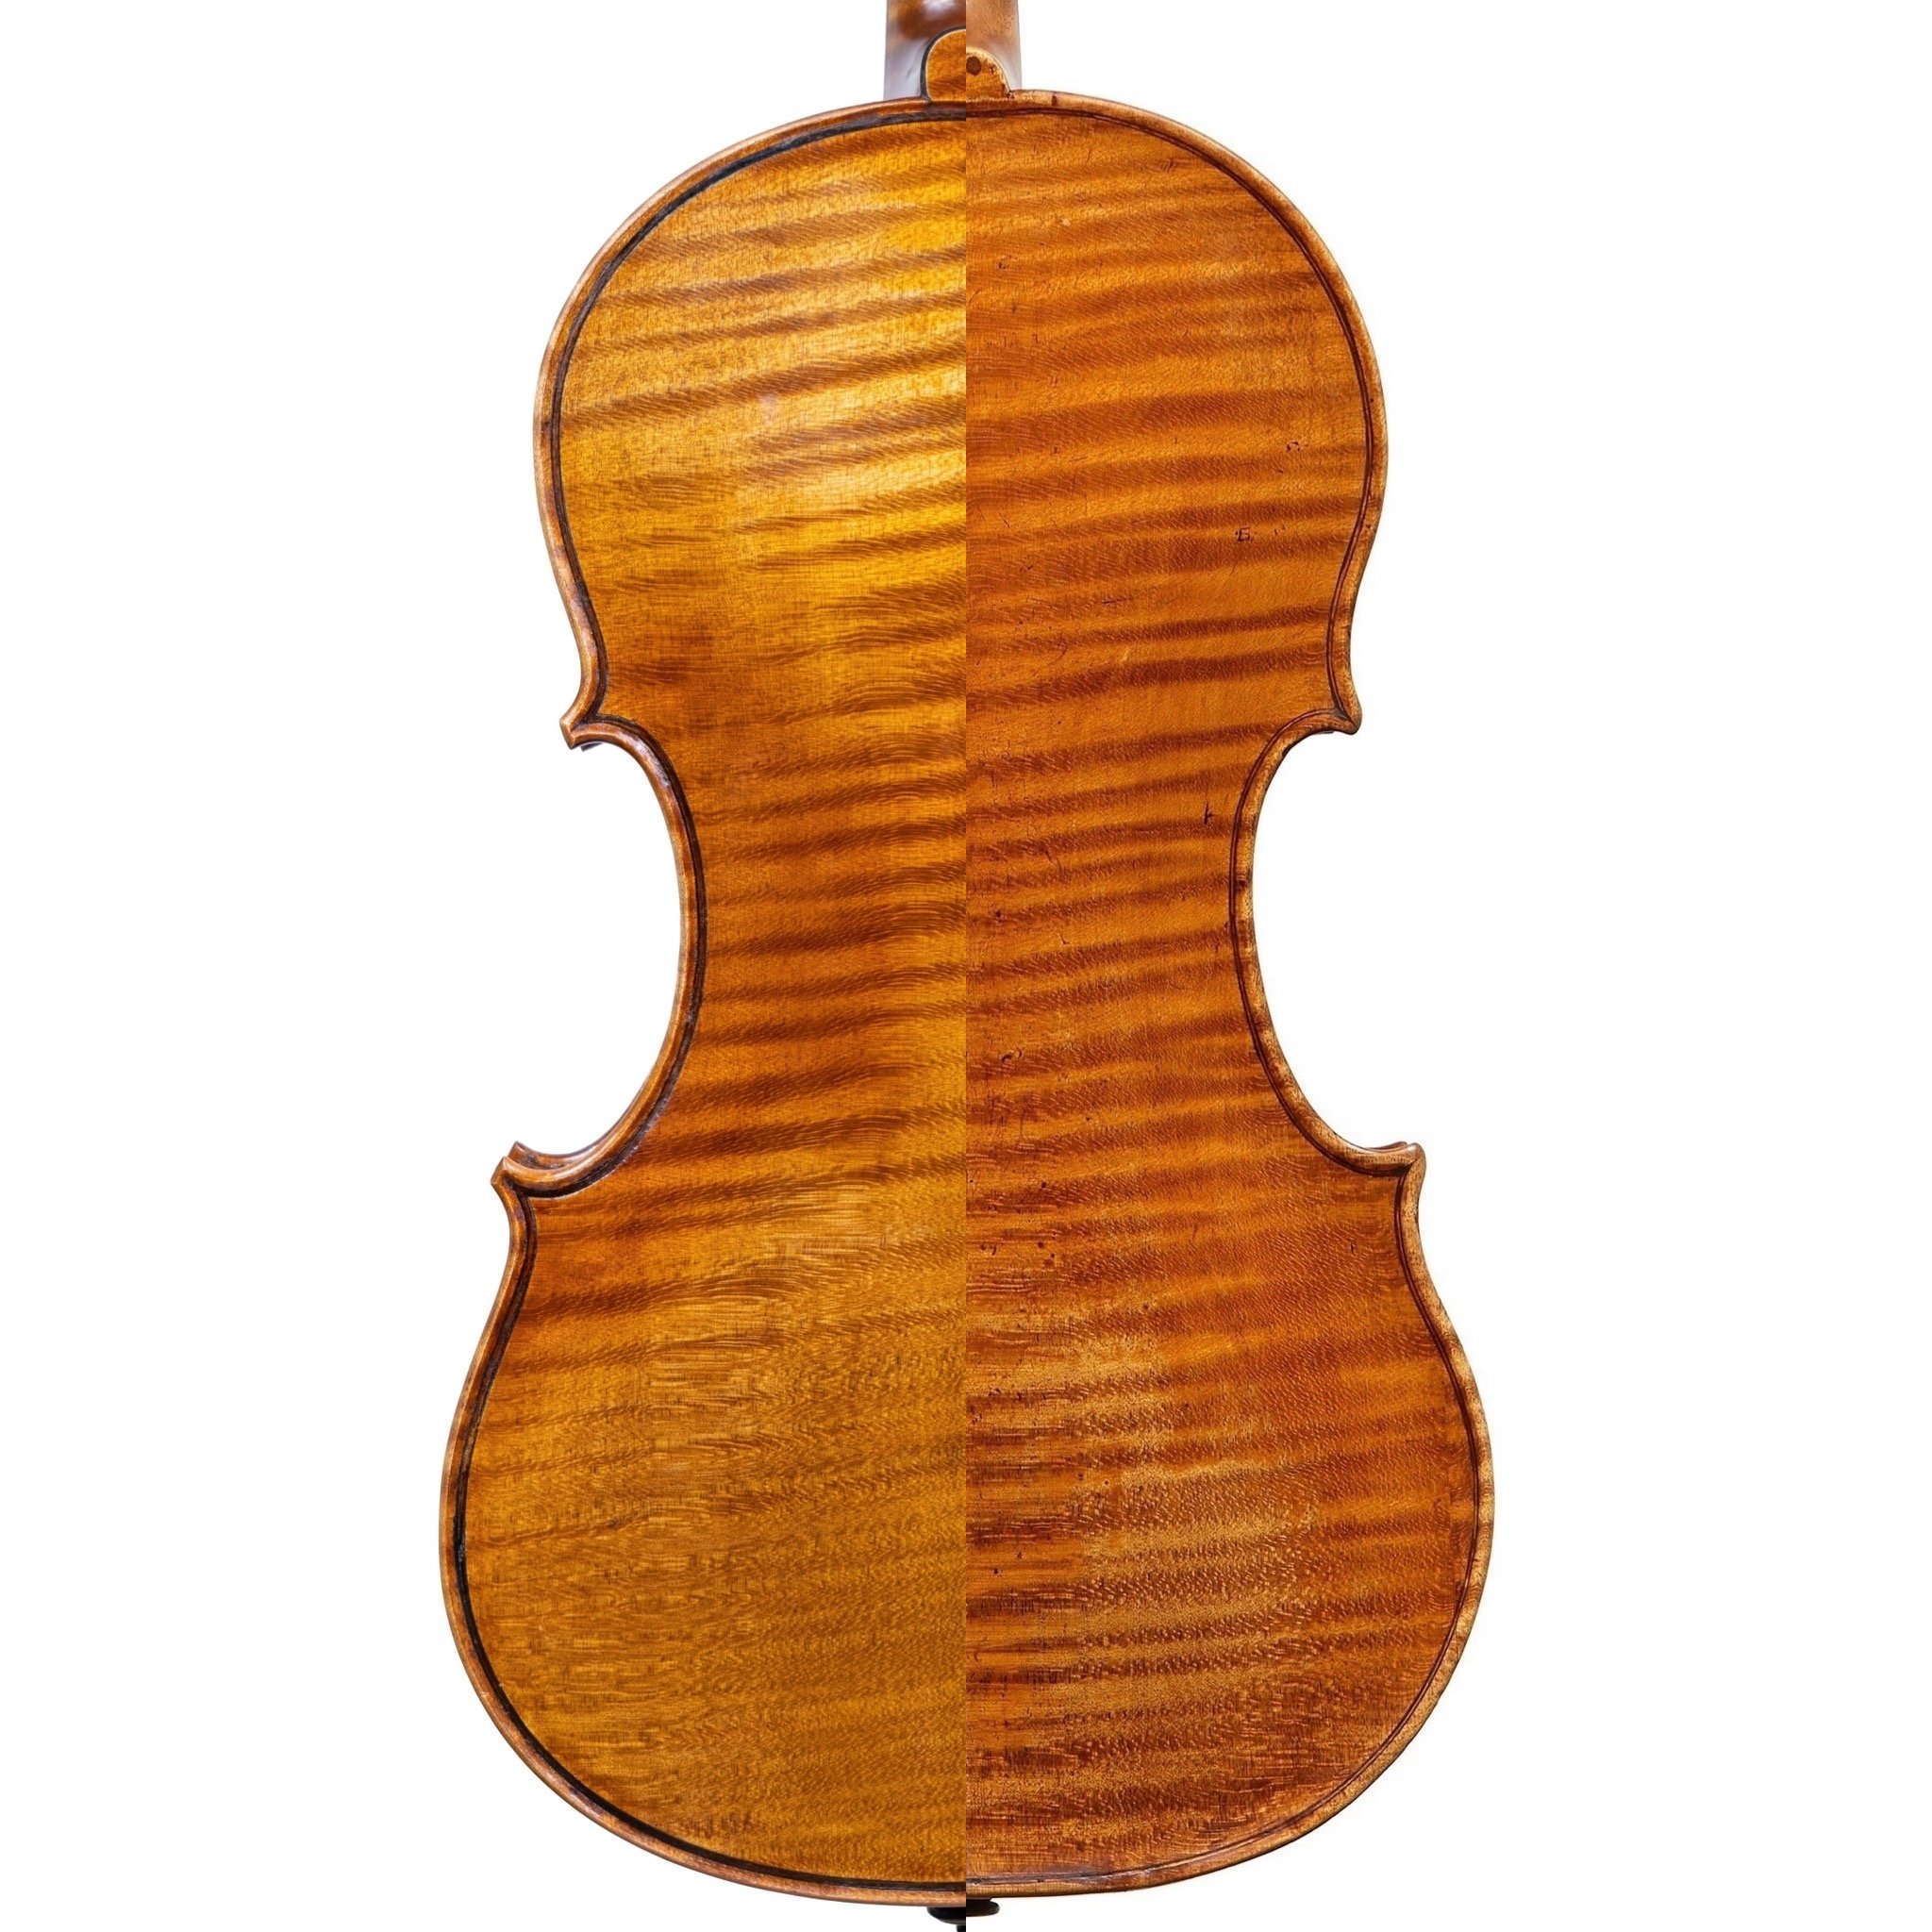 Professional Contemporary Violin